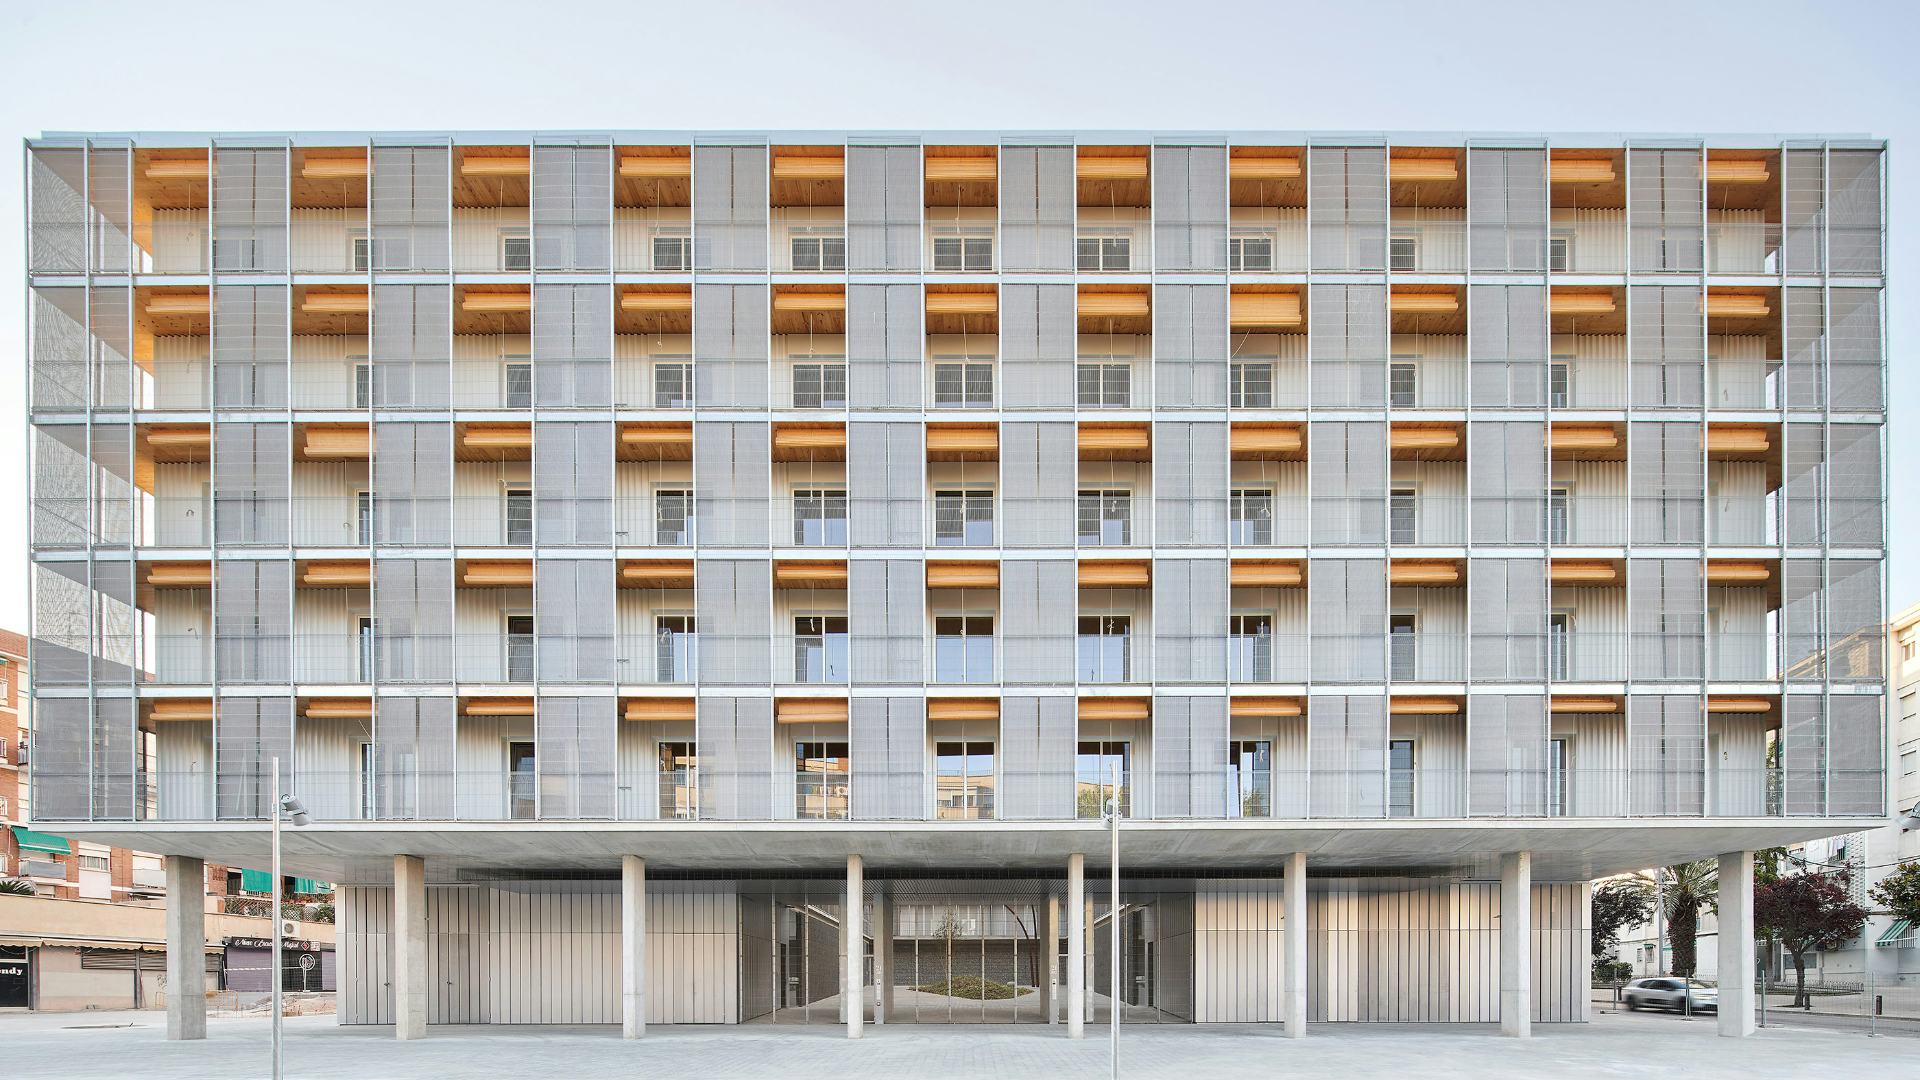 Sociale woningbouw in hout, Barcelona - Studio Peris+Toral Arquitectes